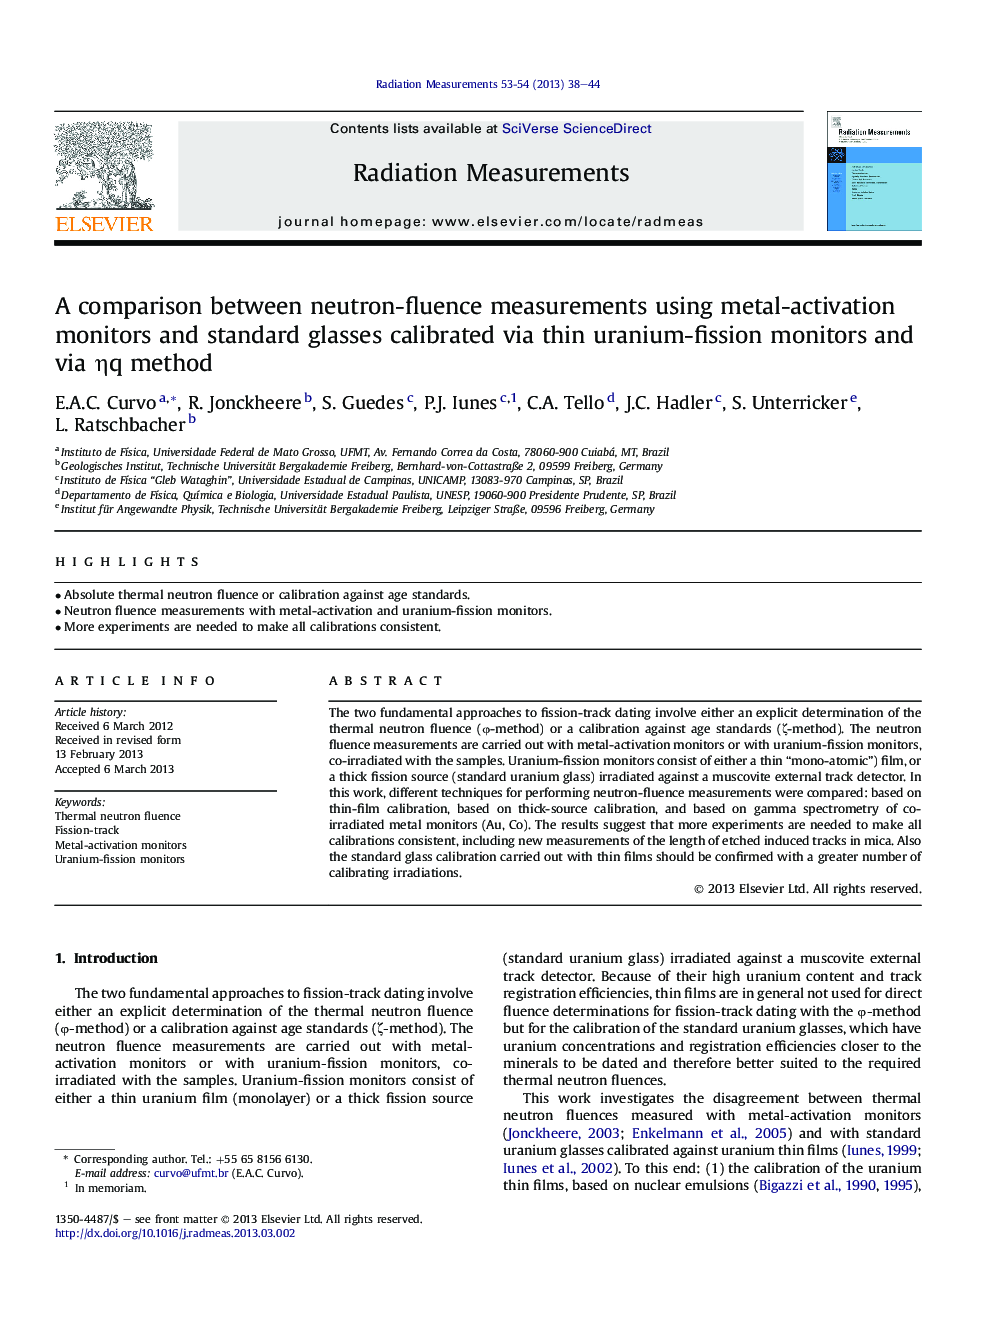 A comparison between neutron-fluence measurements using metal-activation monitors and standard glasses calibrated via thin uranium-fission monitors and via Î·q method